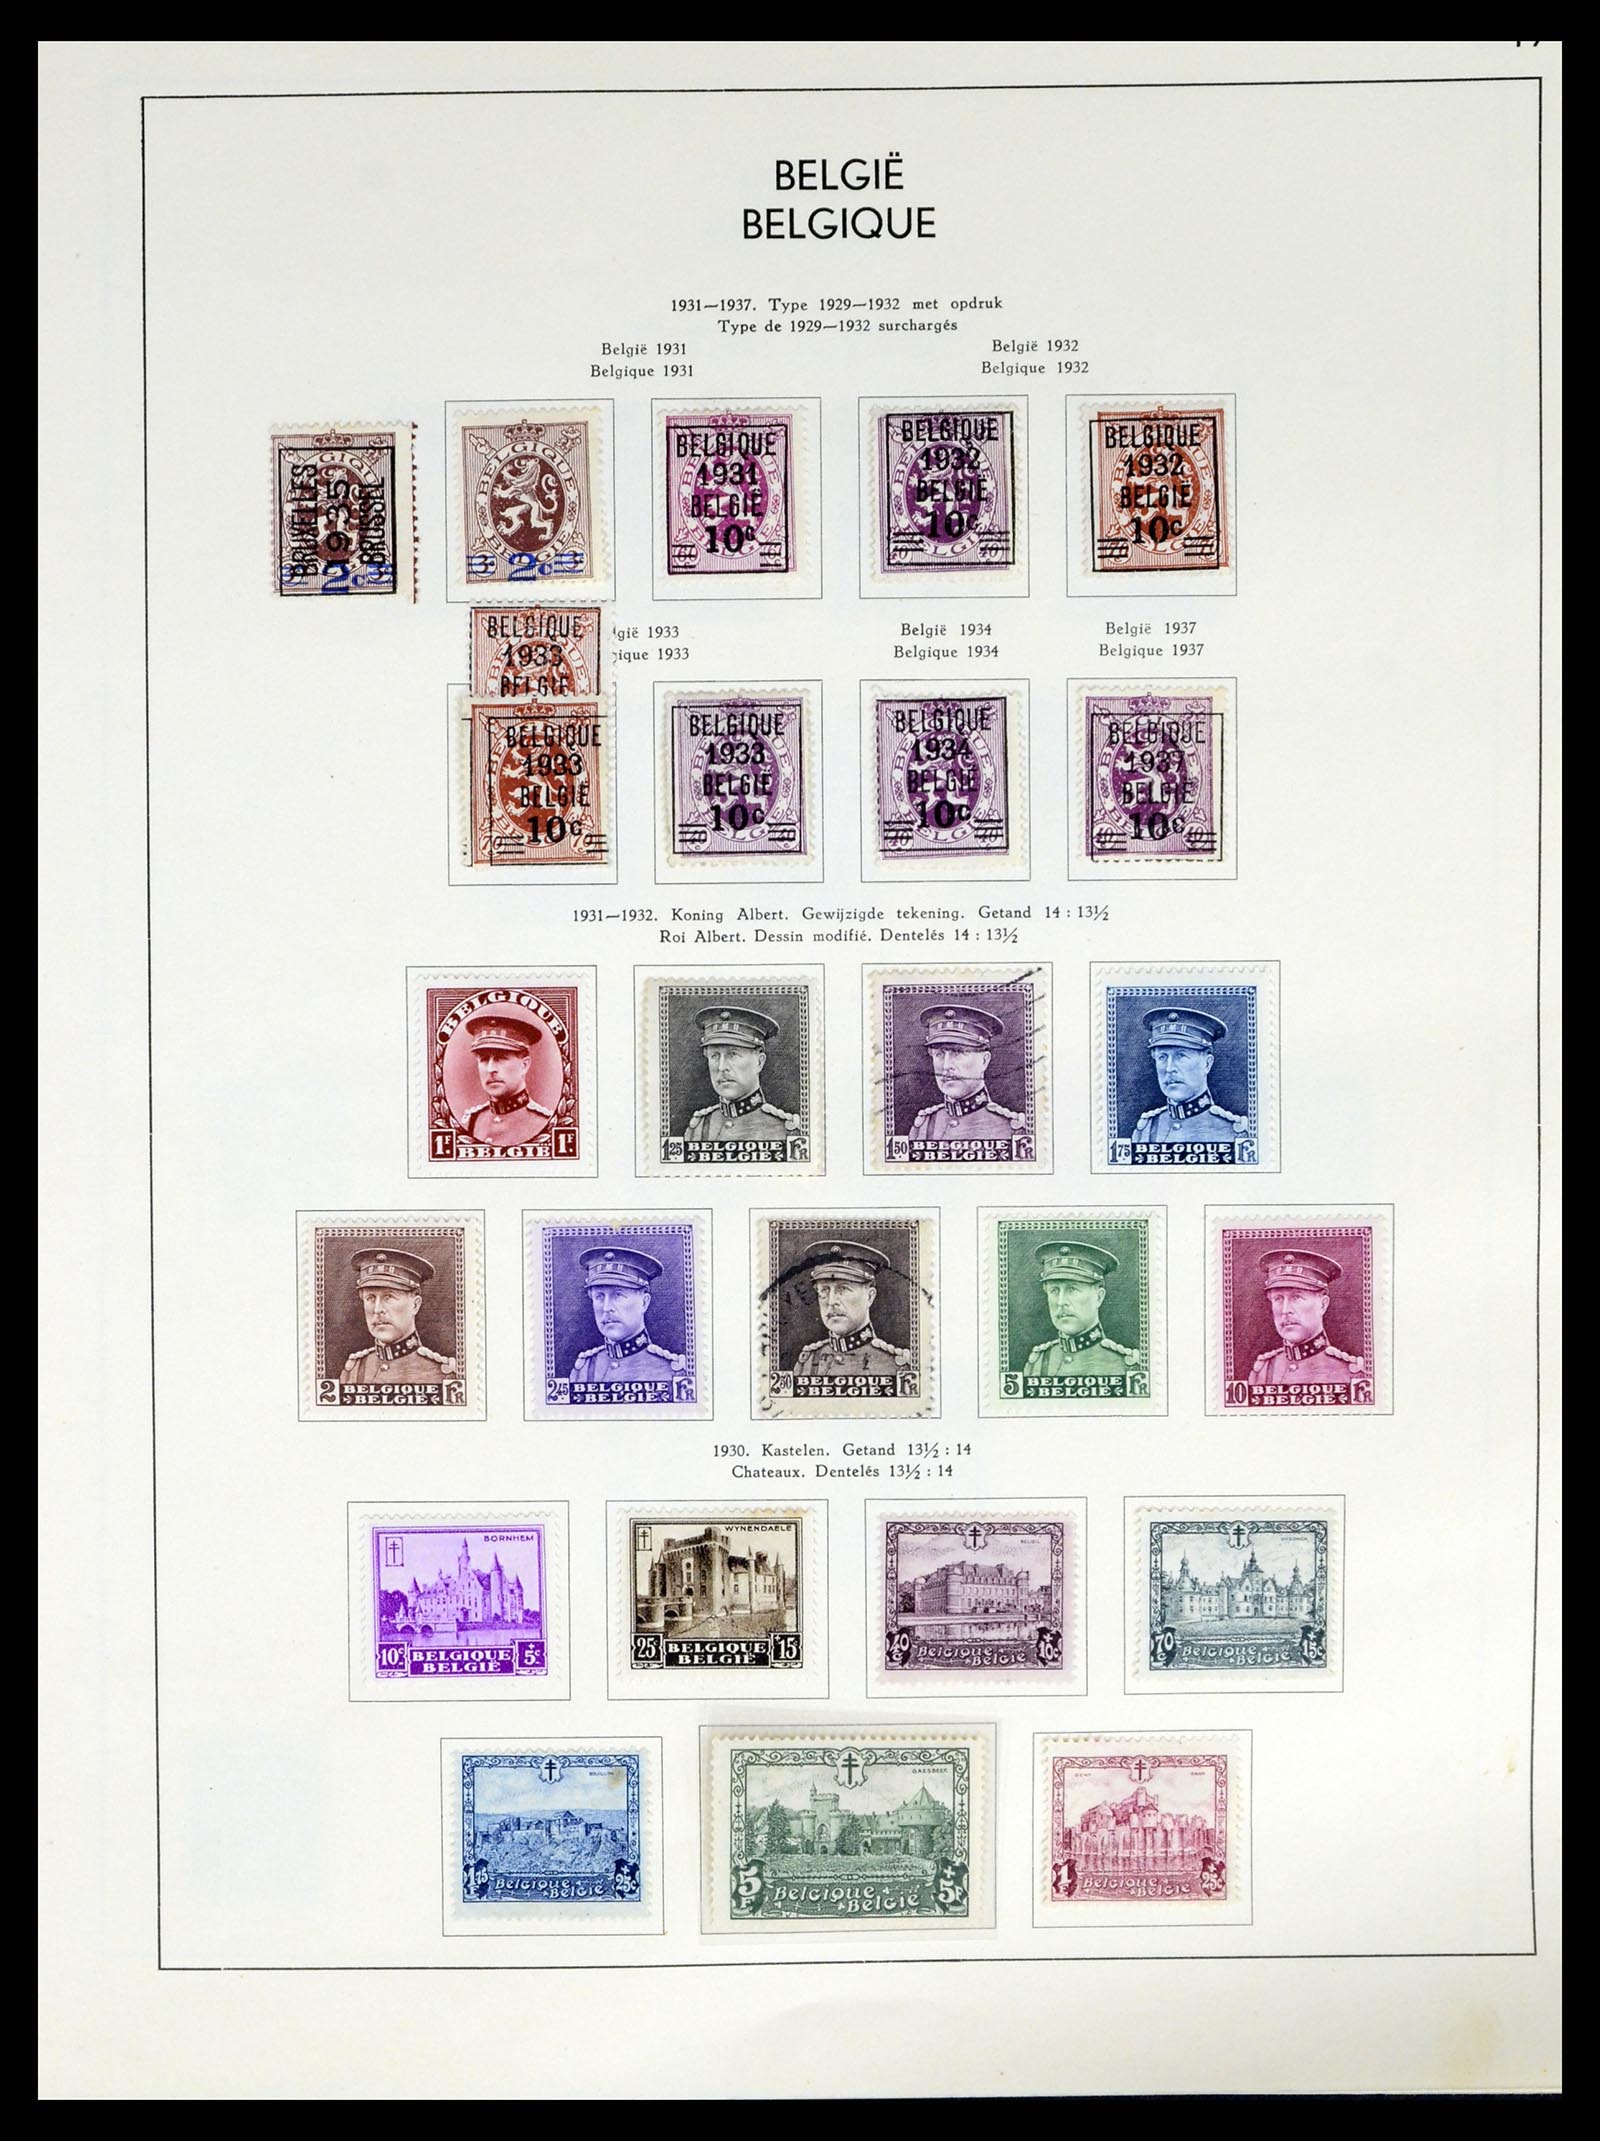 37959 022 - Stamp Collection 37959 Belgium and Belgian Congo 1849-1960.